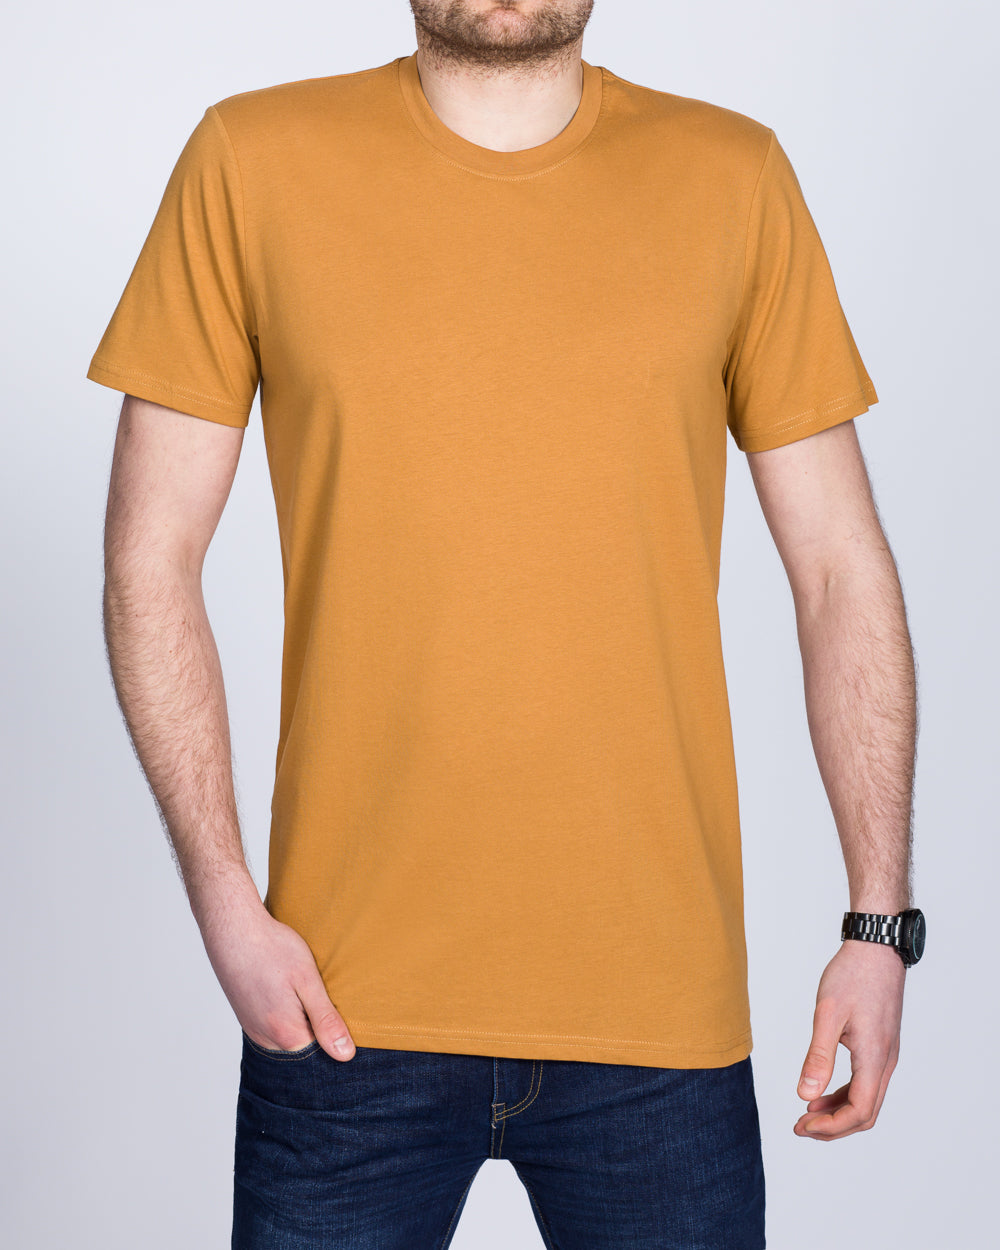 Girav Sydney Tall T-Shirt (sugar brown)